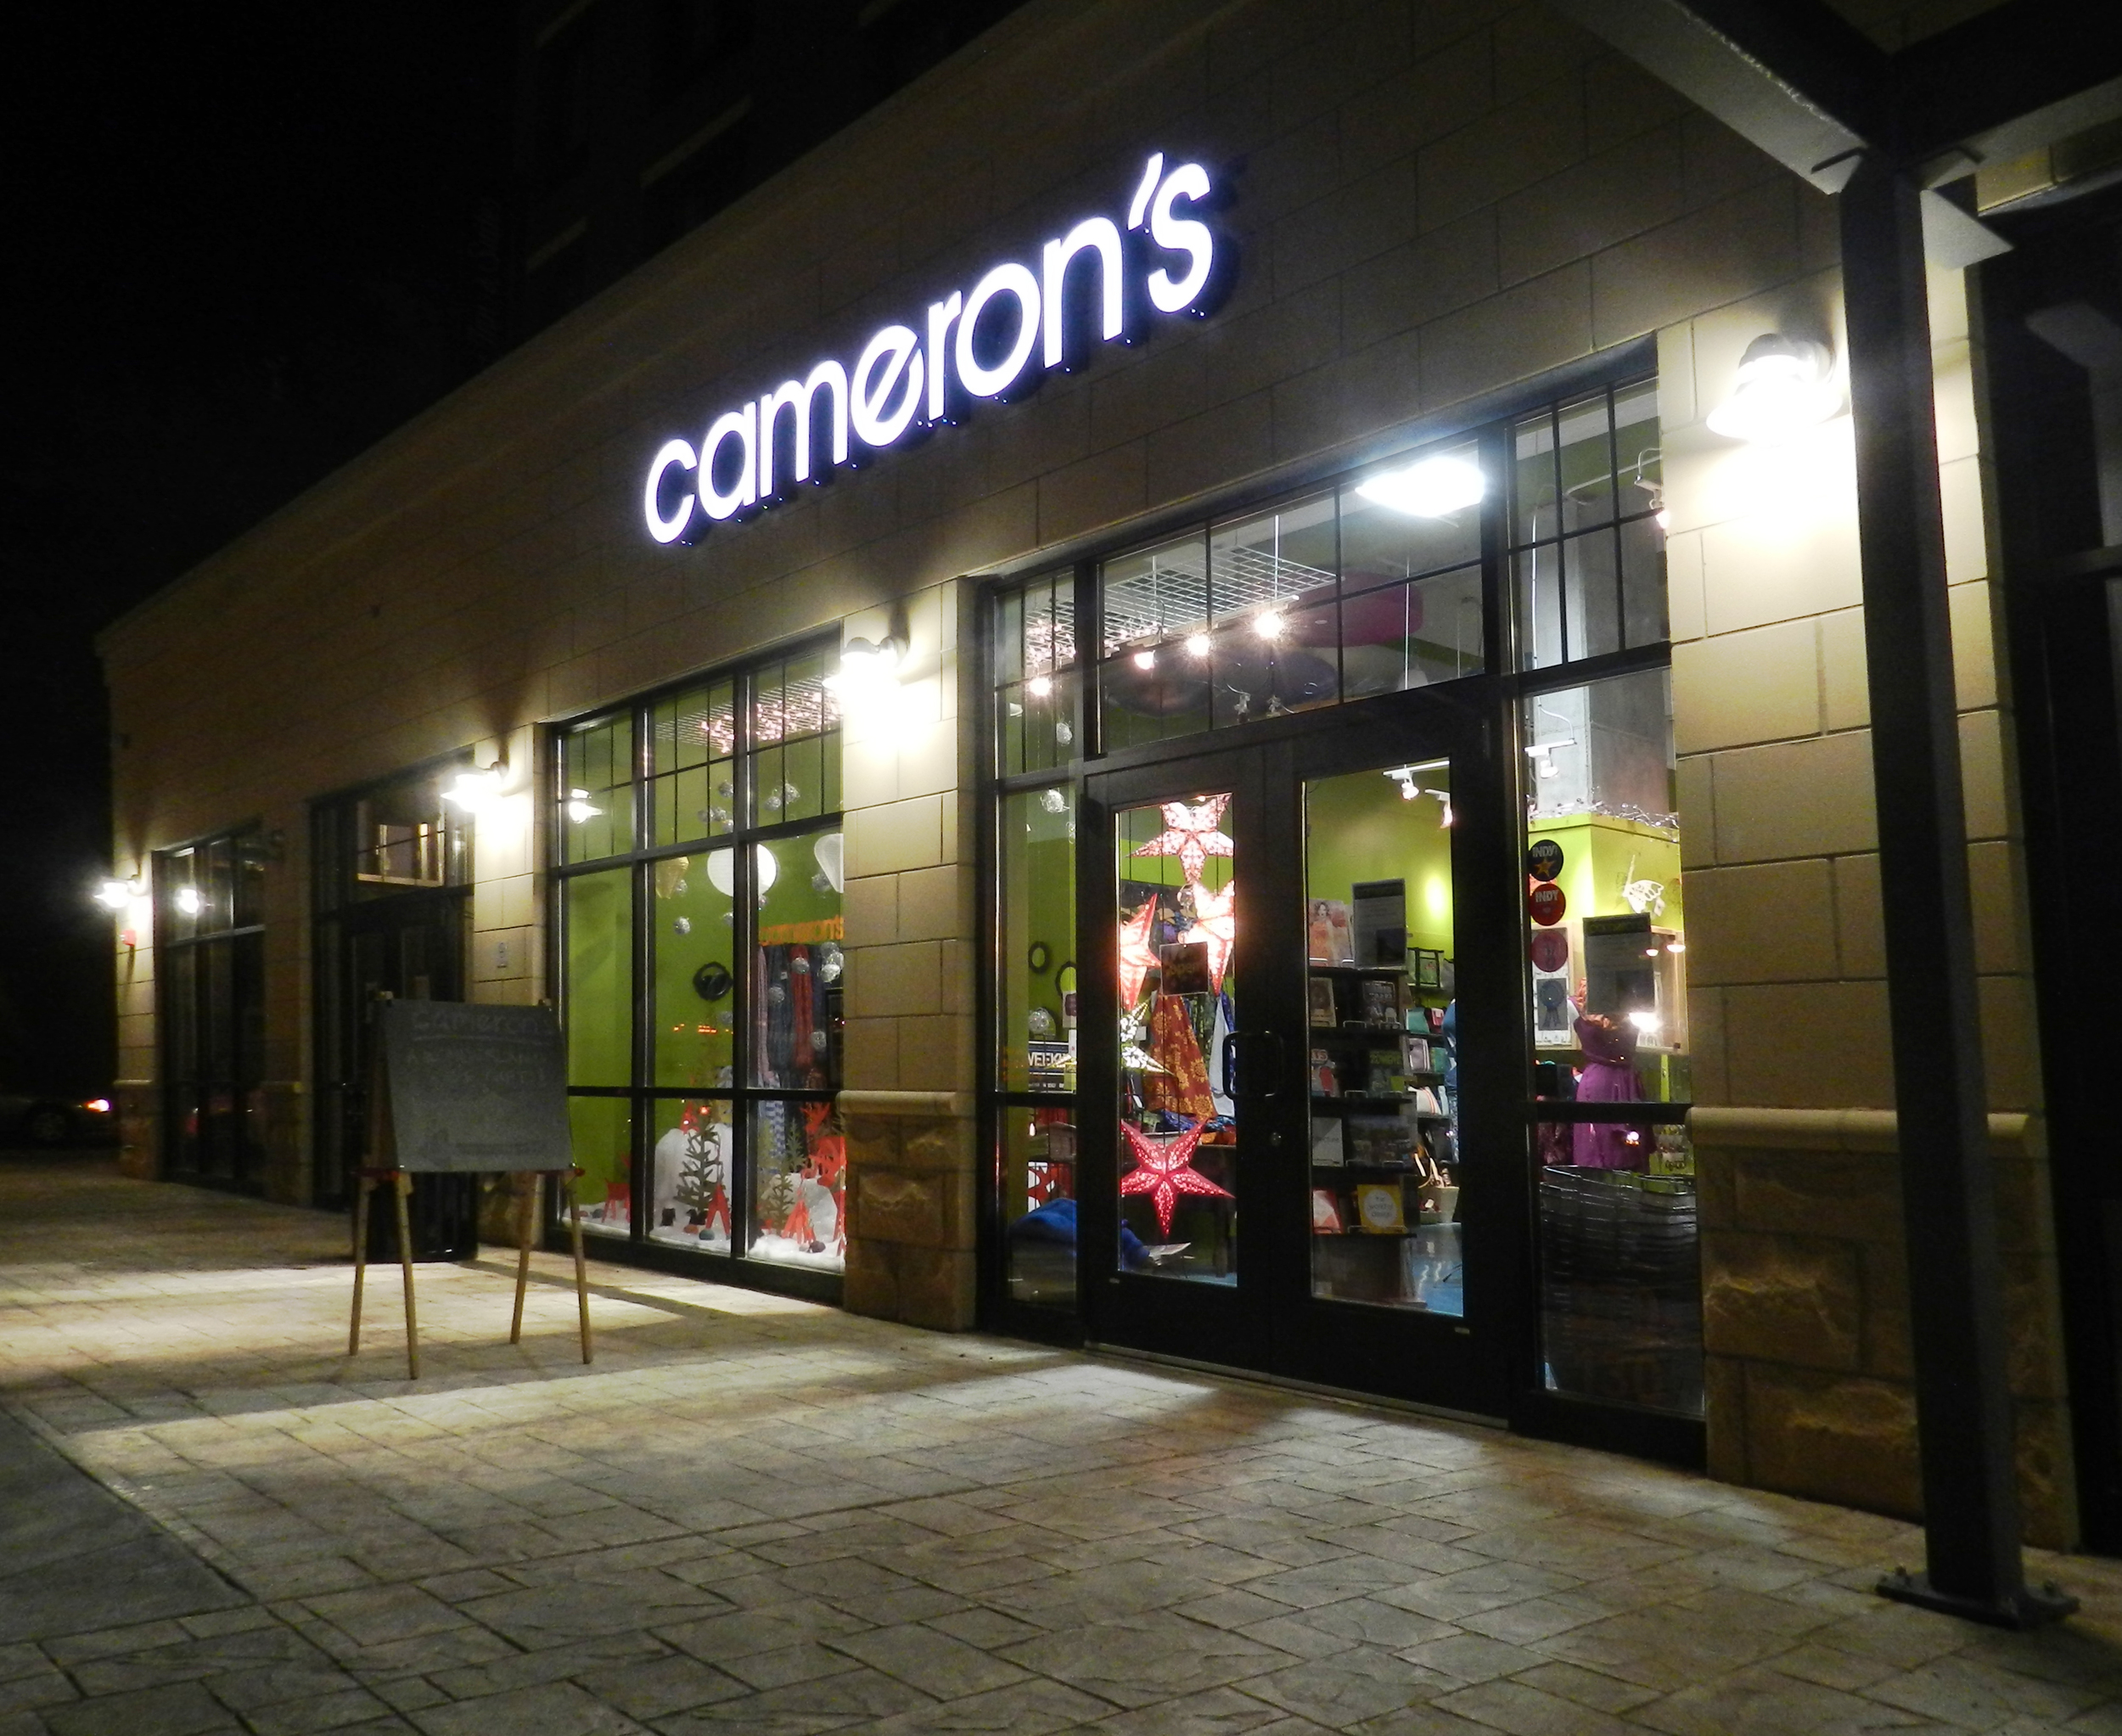 CAMERONS-2 cariedit.jpg